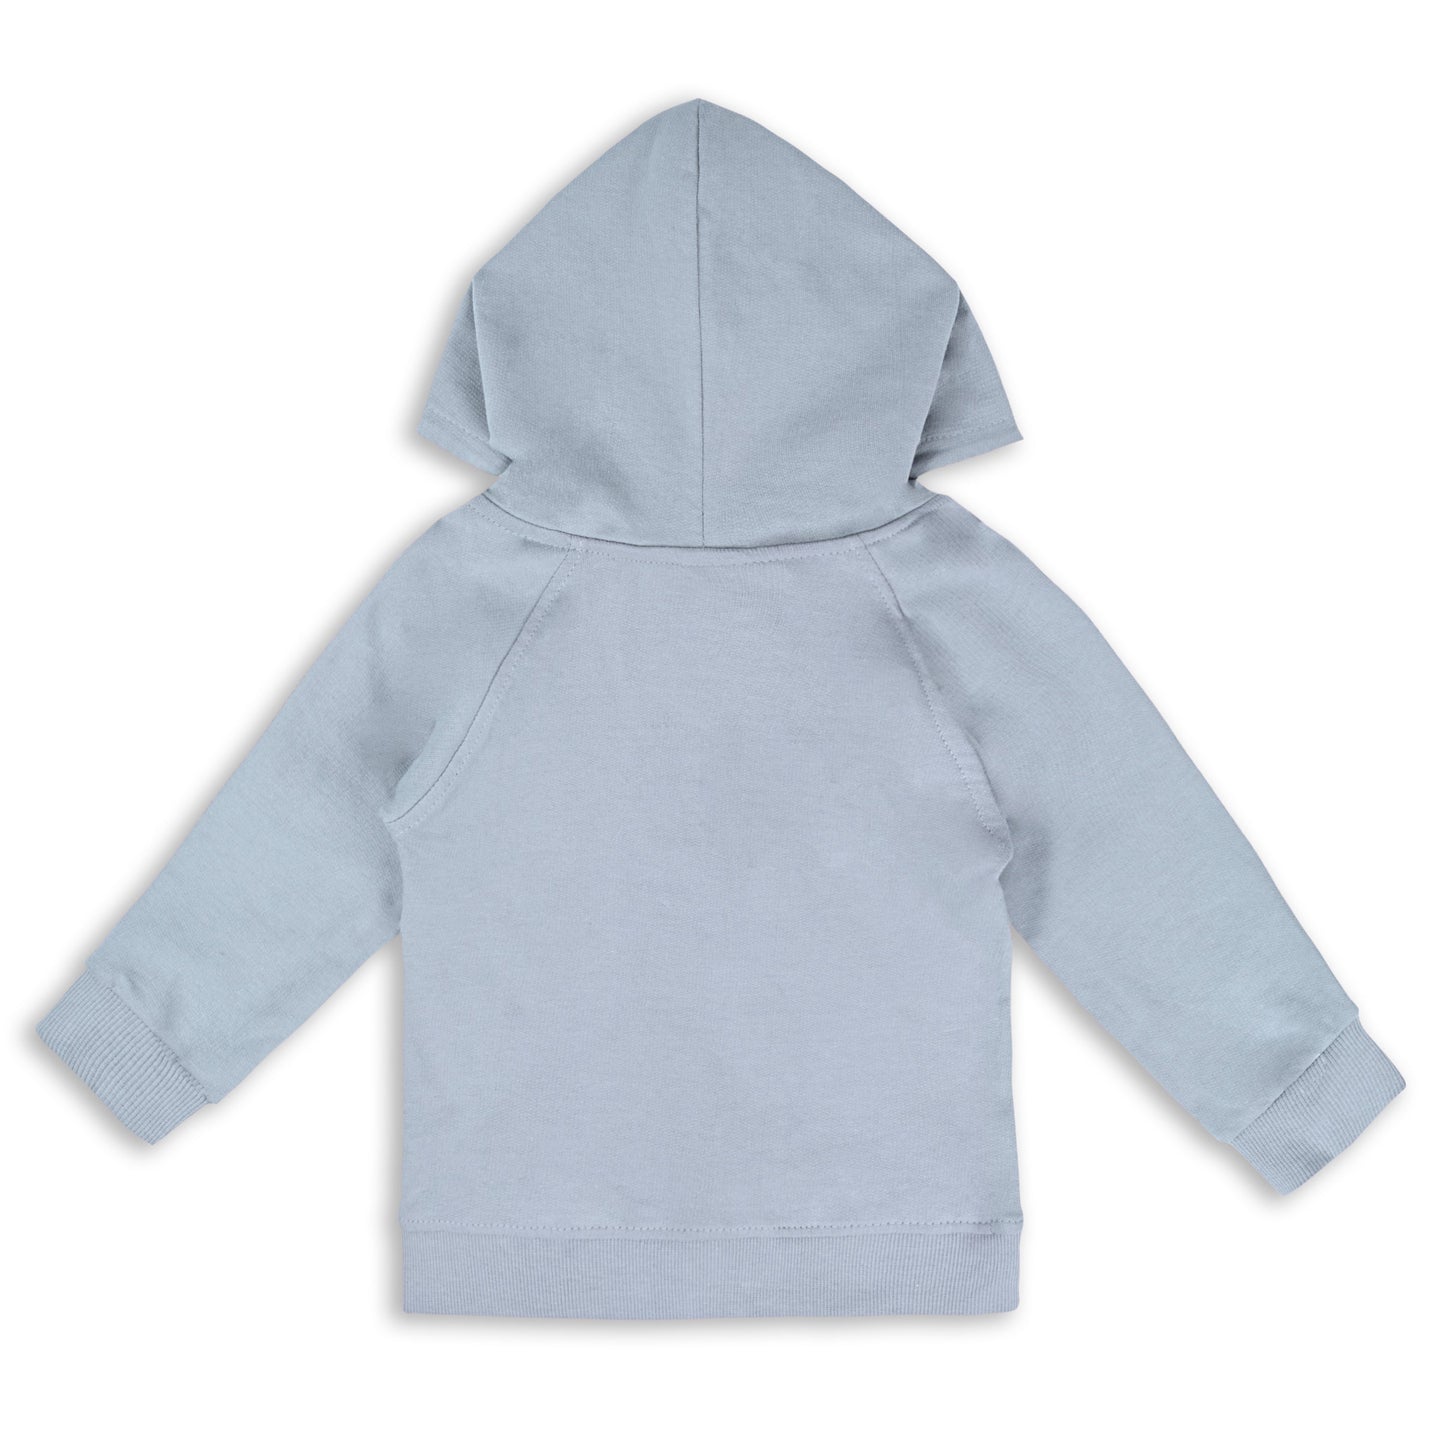 Wishkaro Unisex Cotton Applique Full Sleeve Hooded Sweatshirt-T303gry